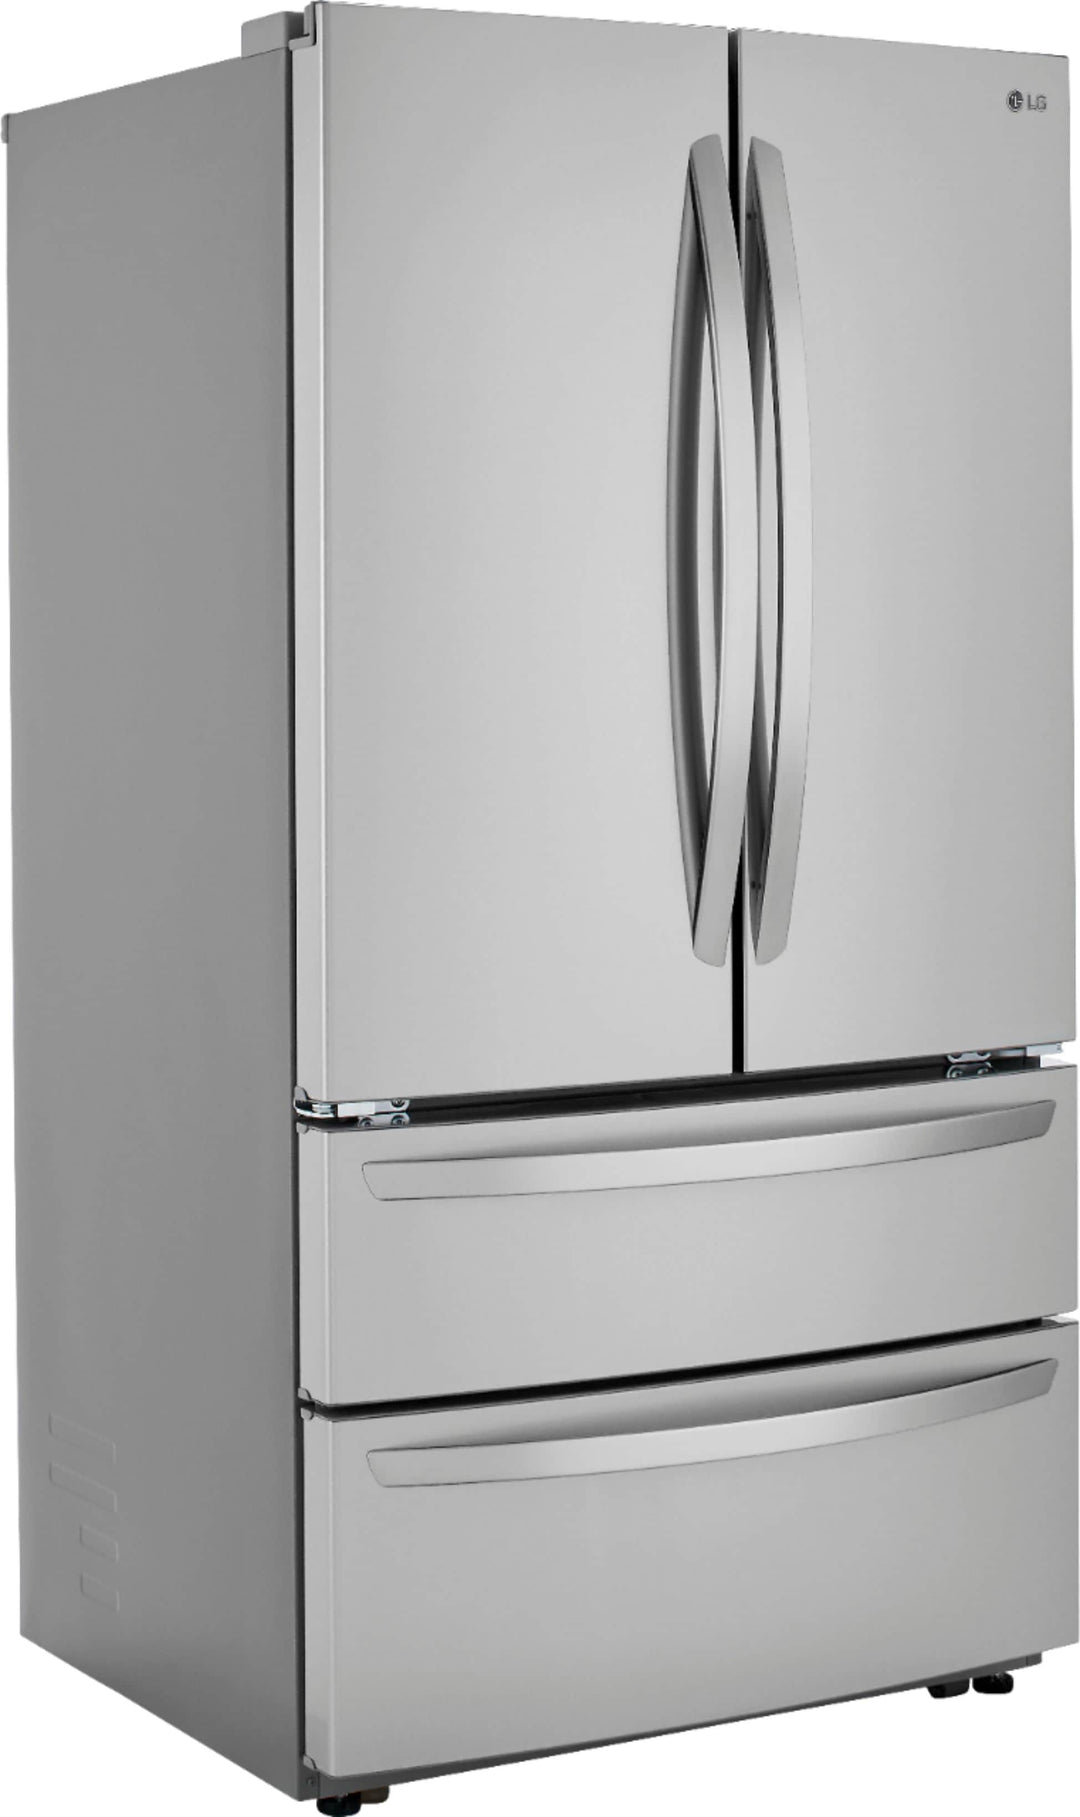 LG - 26.9 Cu. Ft. 4-Door French Door Refrigerator with Internal Water Dispenser and Icemaker - Stainless steel_1